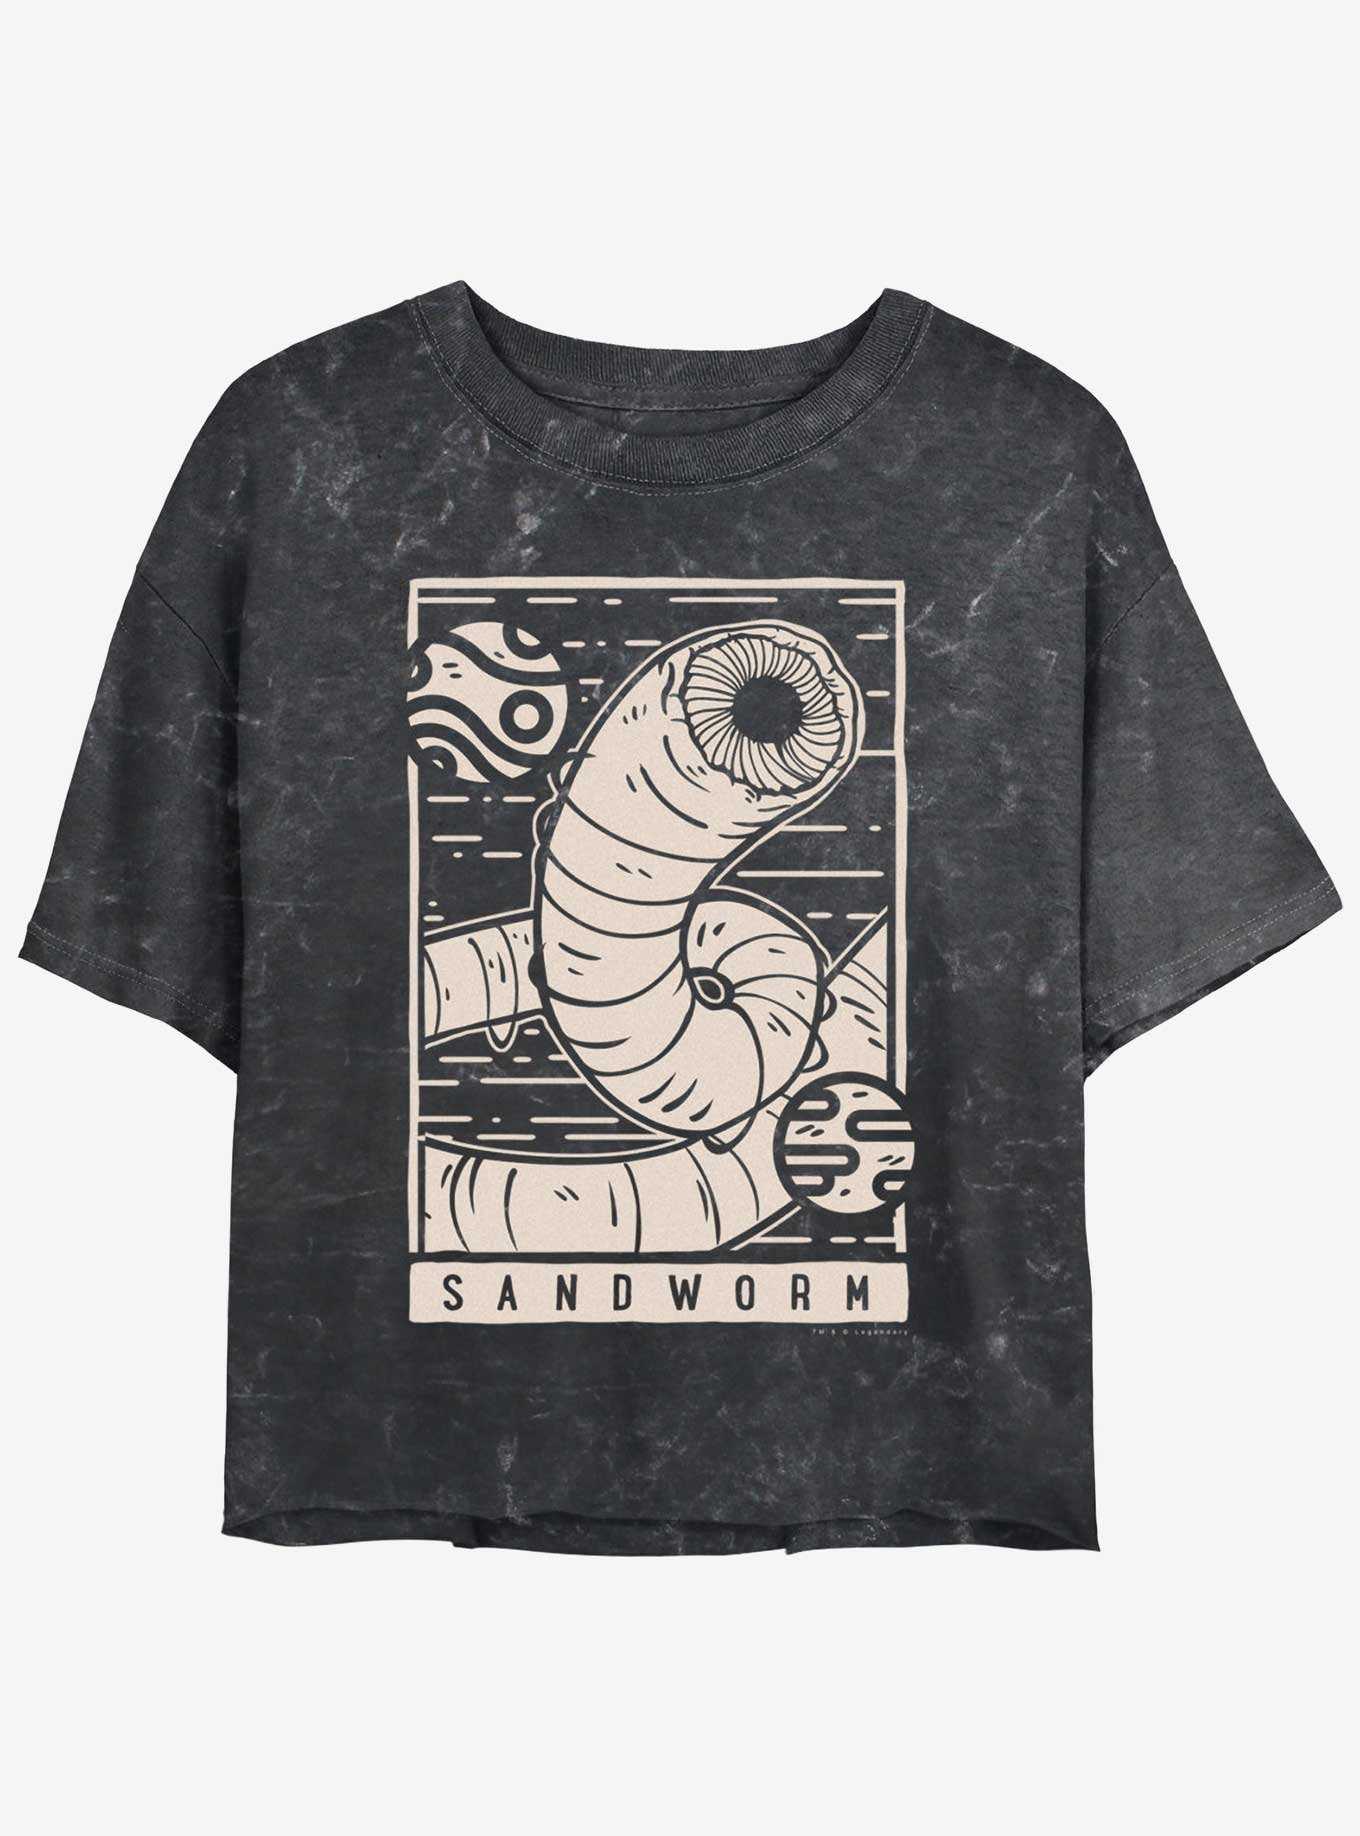 Dune: Part Two Sandworm Illustration Mineral Wash Girls Crop T-Shirt, , hi-res